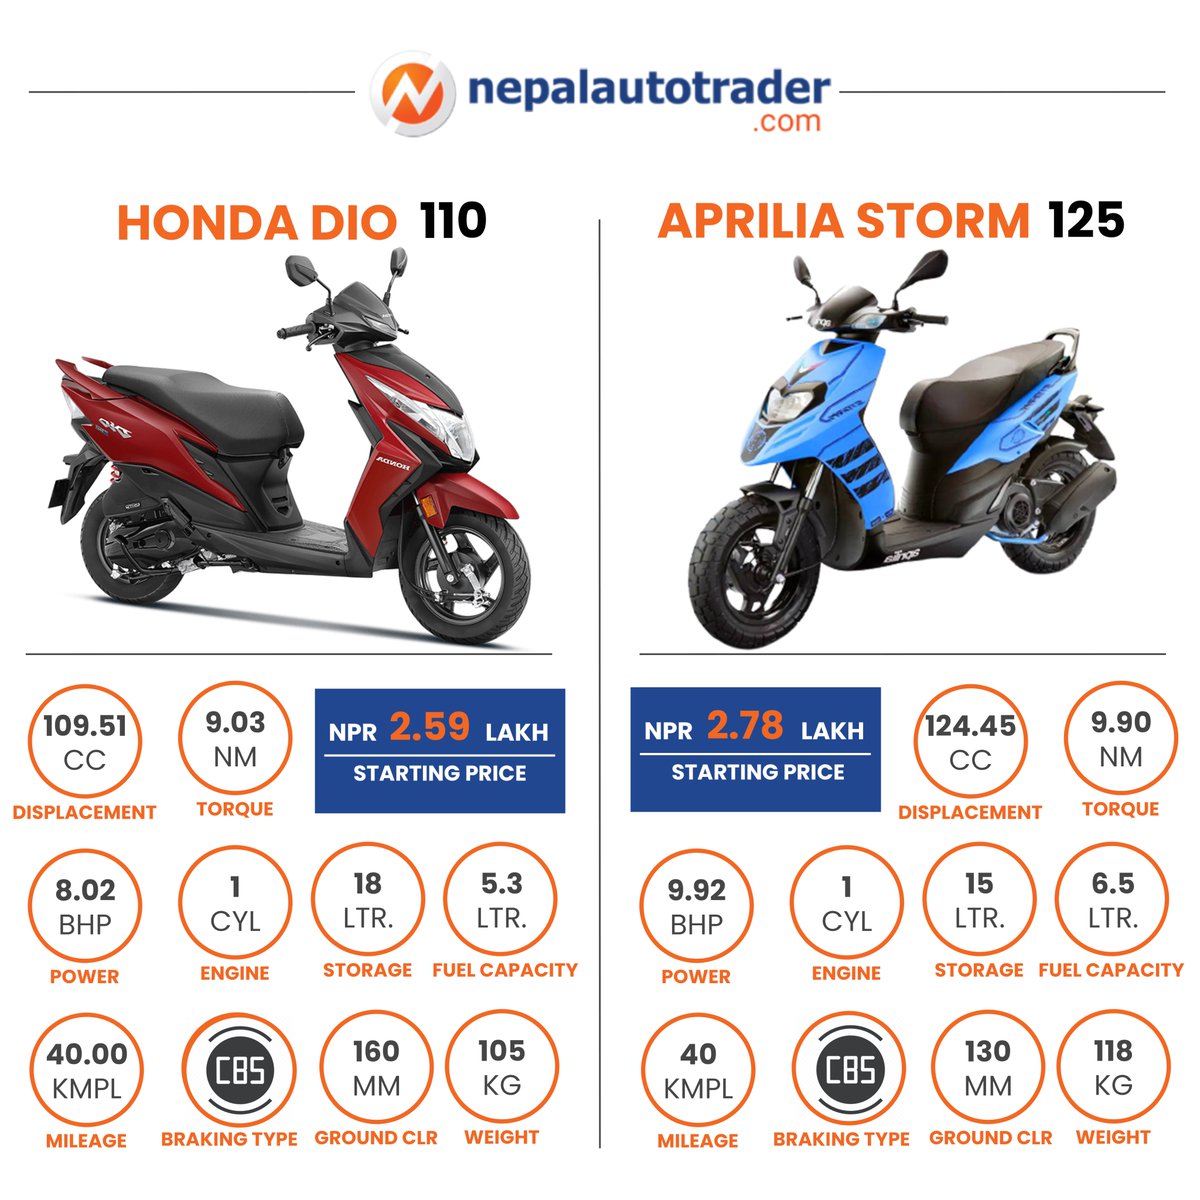 Here is a quick comparison between Honda Dio 110 BS6 and Aprilia Storm 125. #Autonews #AutonewsNepal #Scooters #ScootersNepal #HondaScooters #HondaNepal #HondaDio #HondaDio110 #HondaDio110BS6 #ApriliaScooters #ApriliaNepal #ApriliaStorm #ApriliaStorm125 #Nepalautotrader